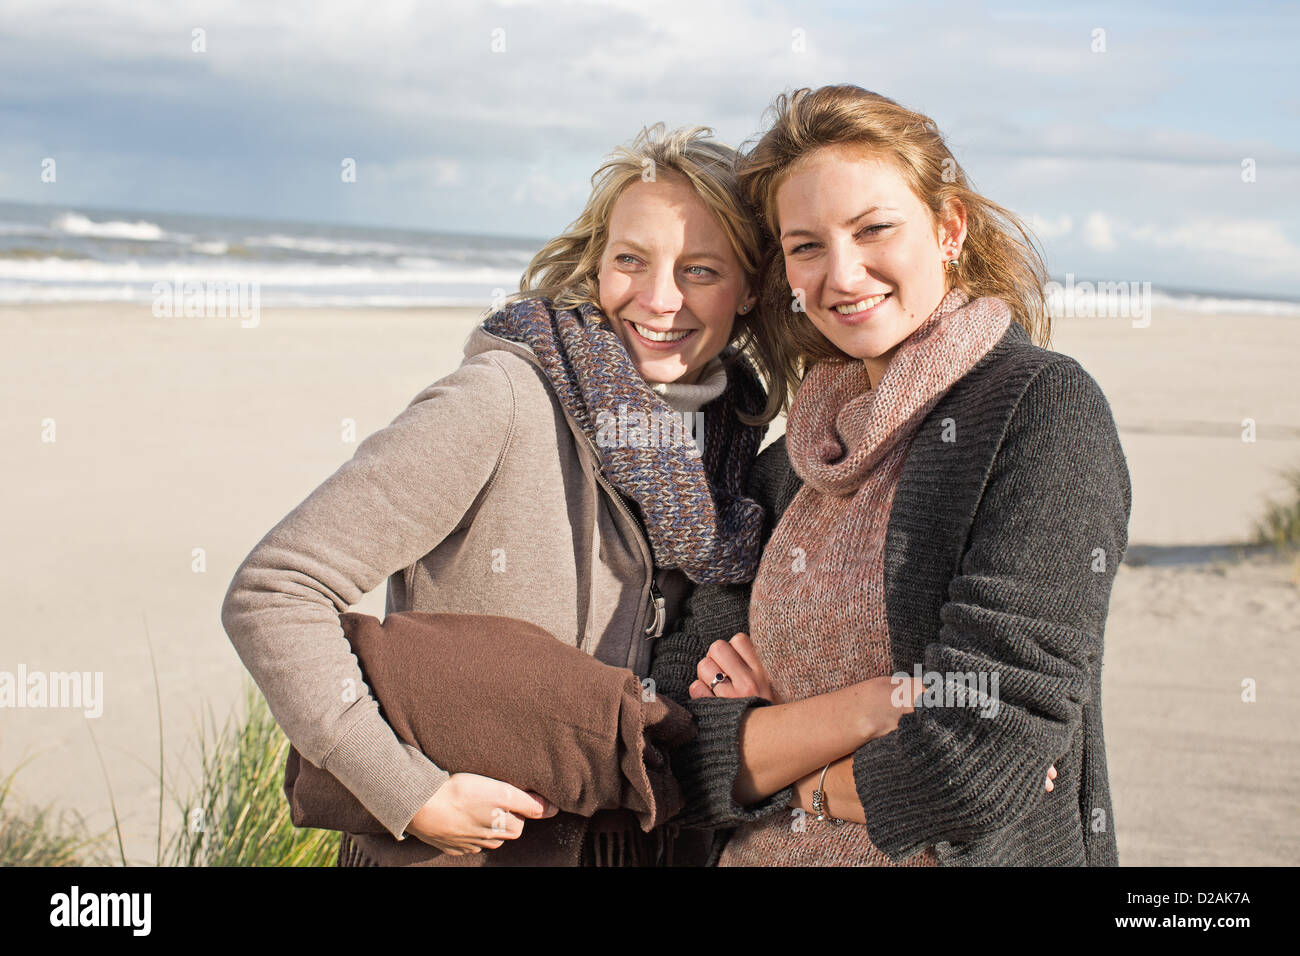 Smiling women standing on beach Stock Photo